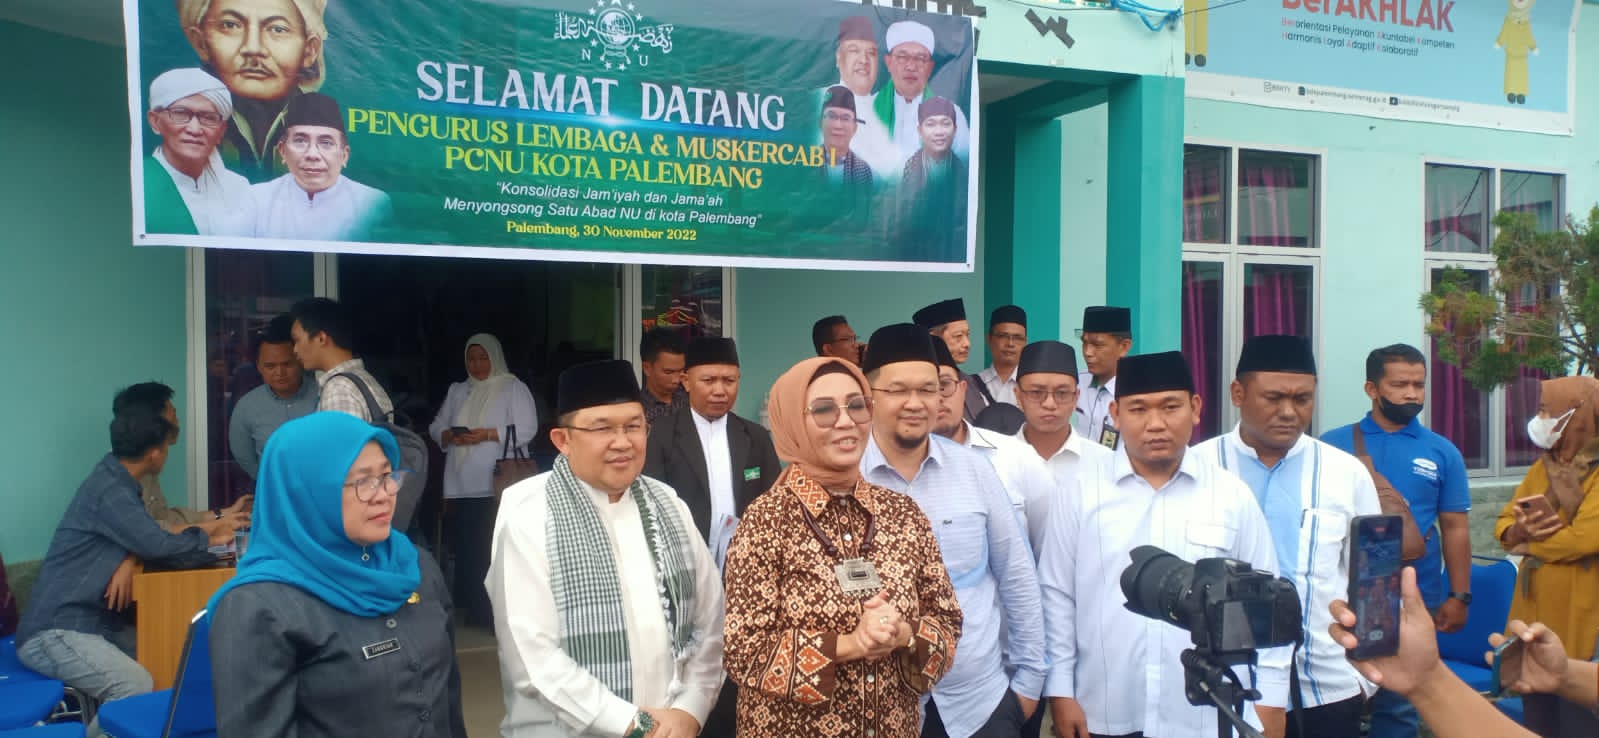 Selamat dan sukses Atas pelantikan PCNU Kota Palembang